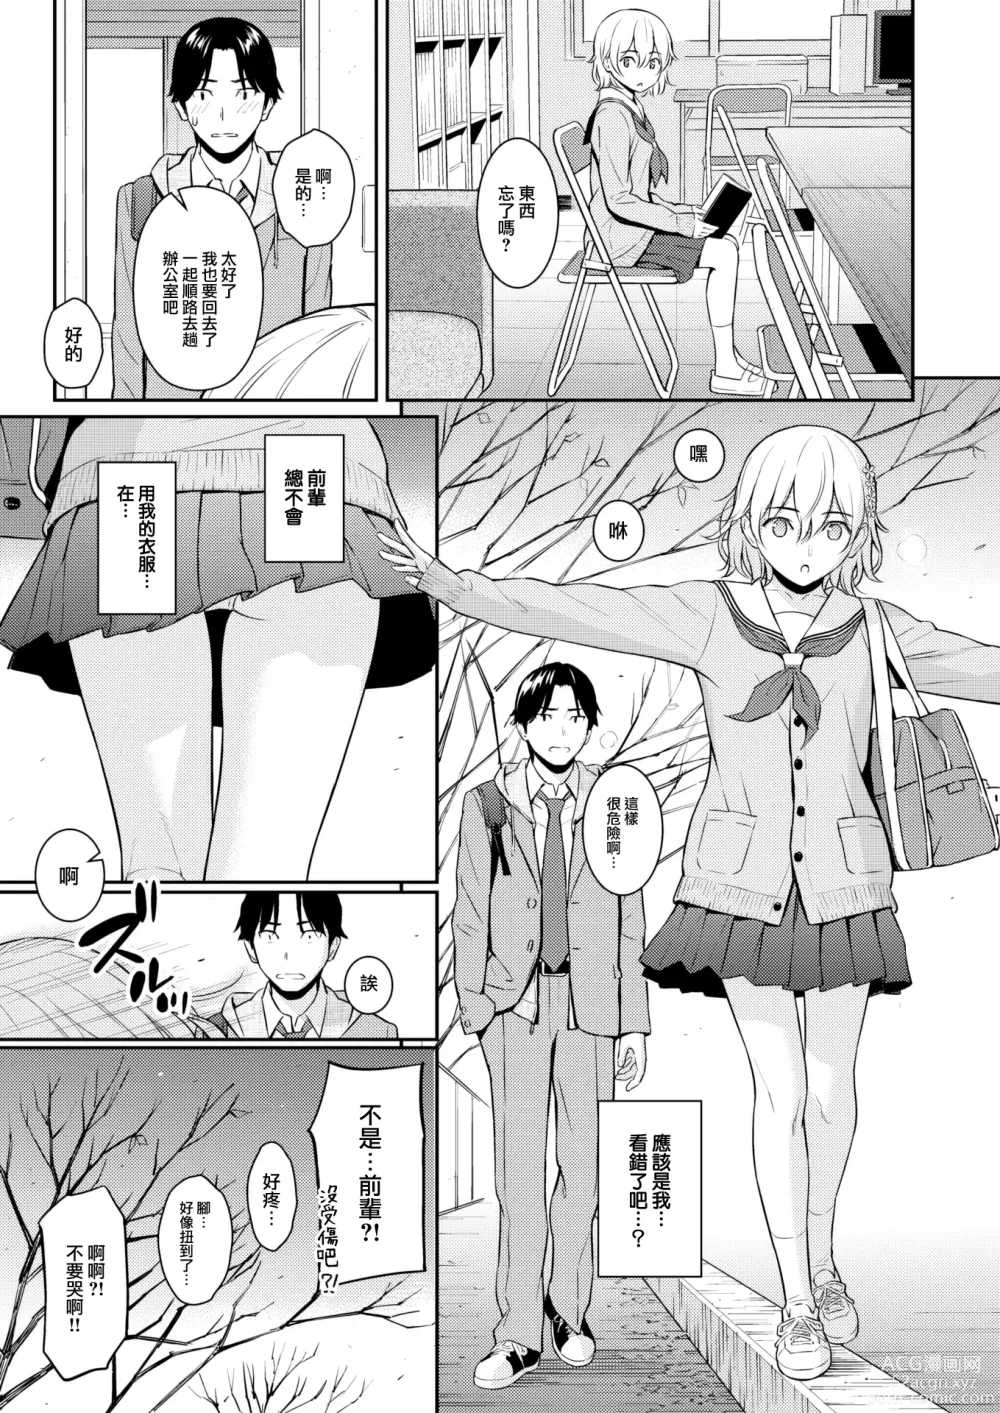 Page 10 of manga Pure White